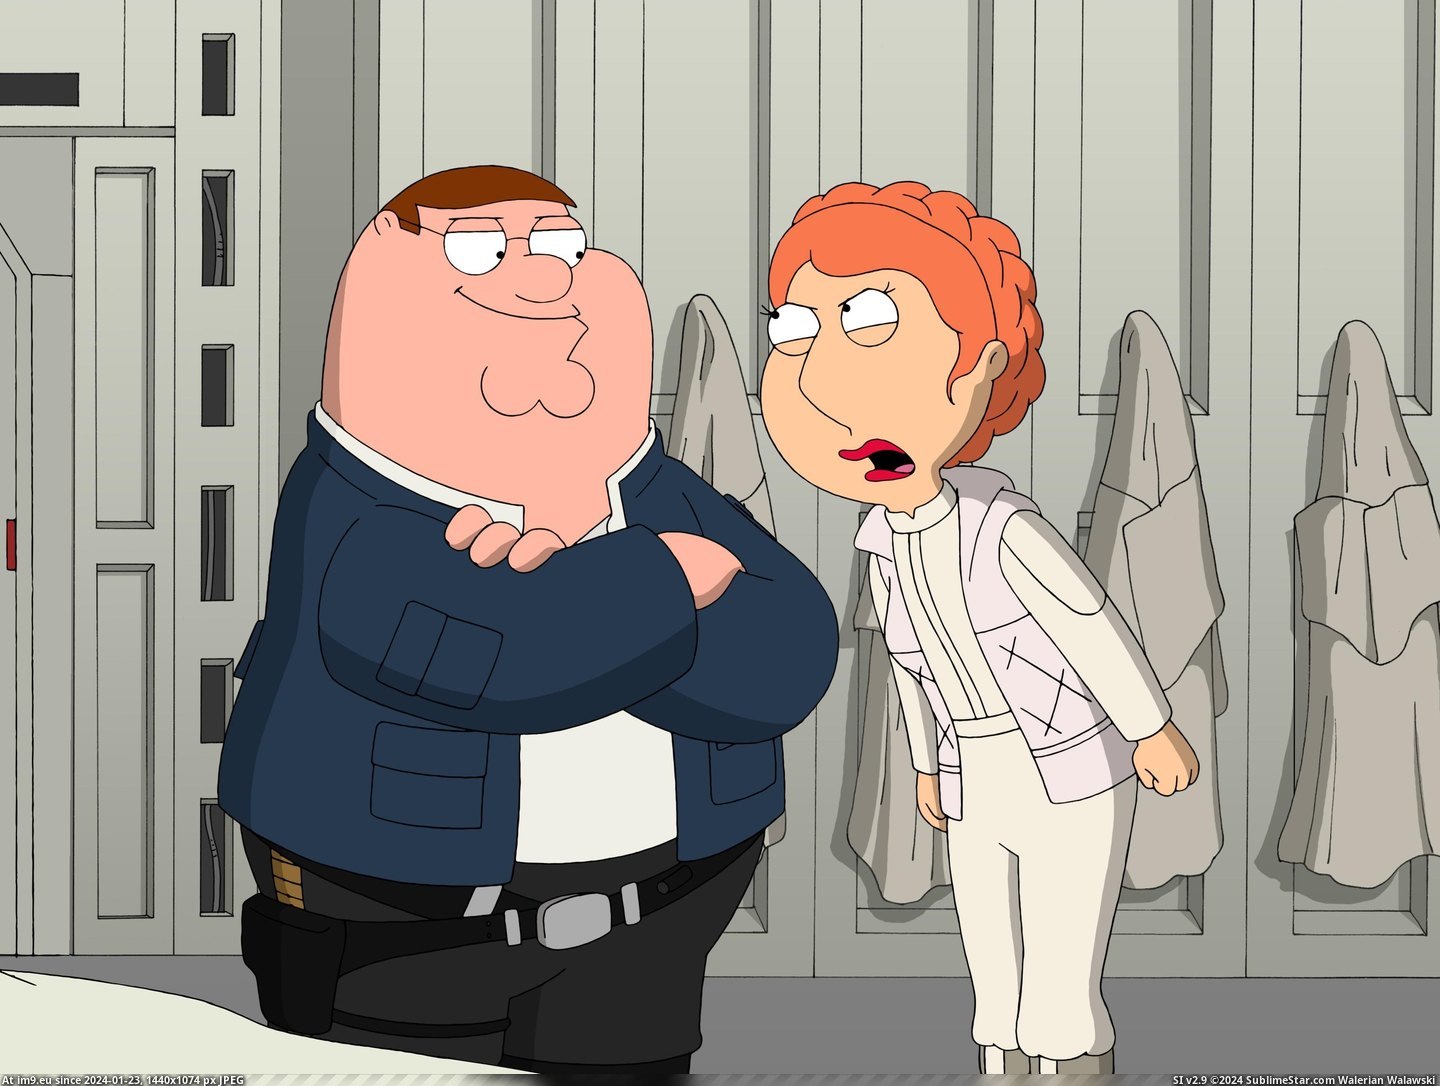 #Guy #Cartoon #Family Cartoon Family Guy 178528 Pic. (Bild von album TV Shows HD Wallpapers))